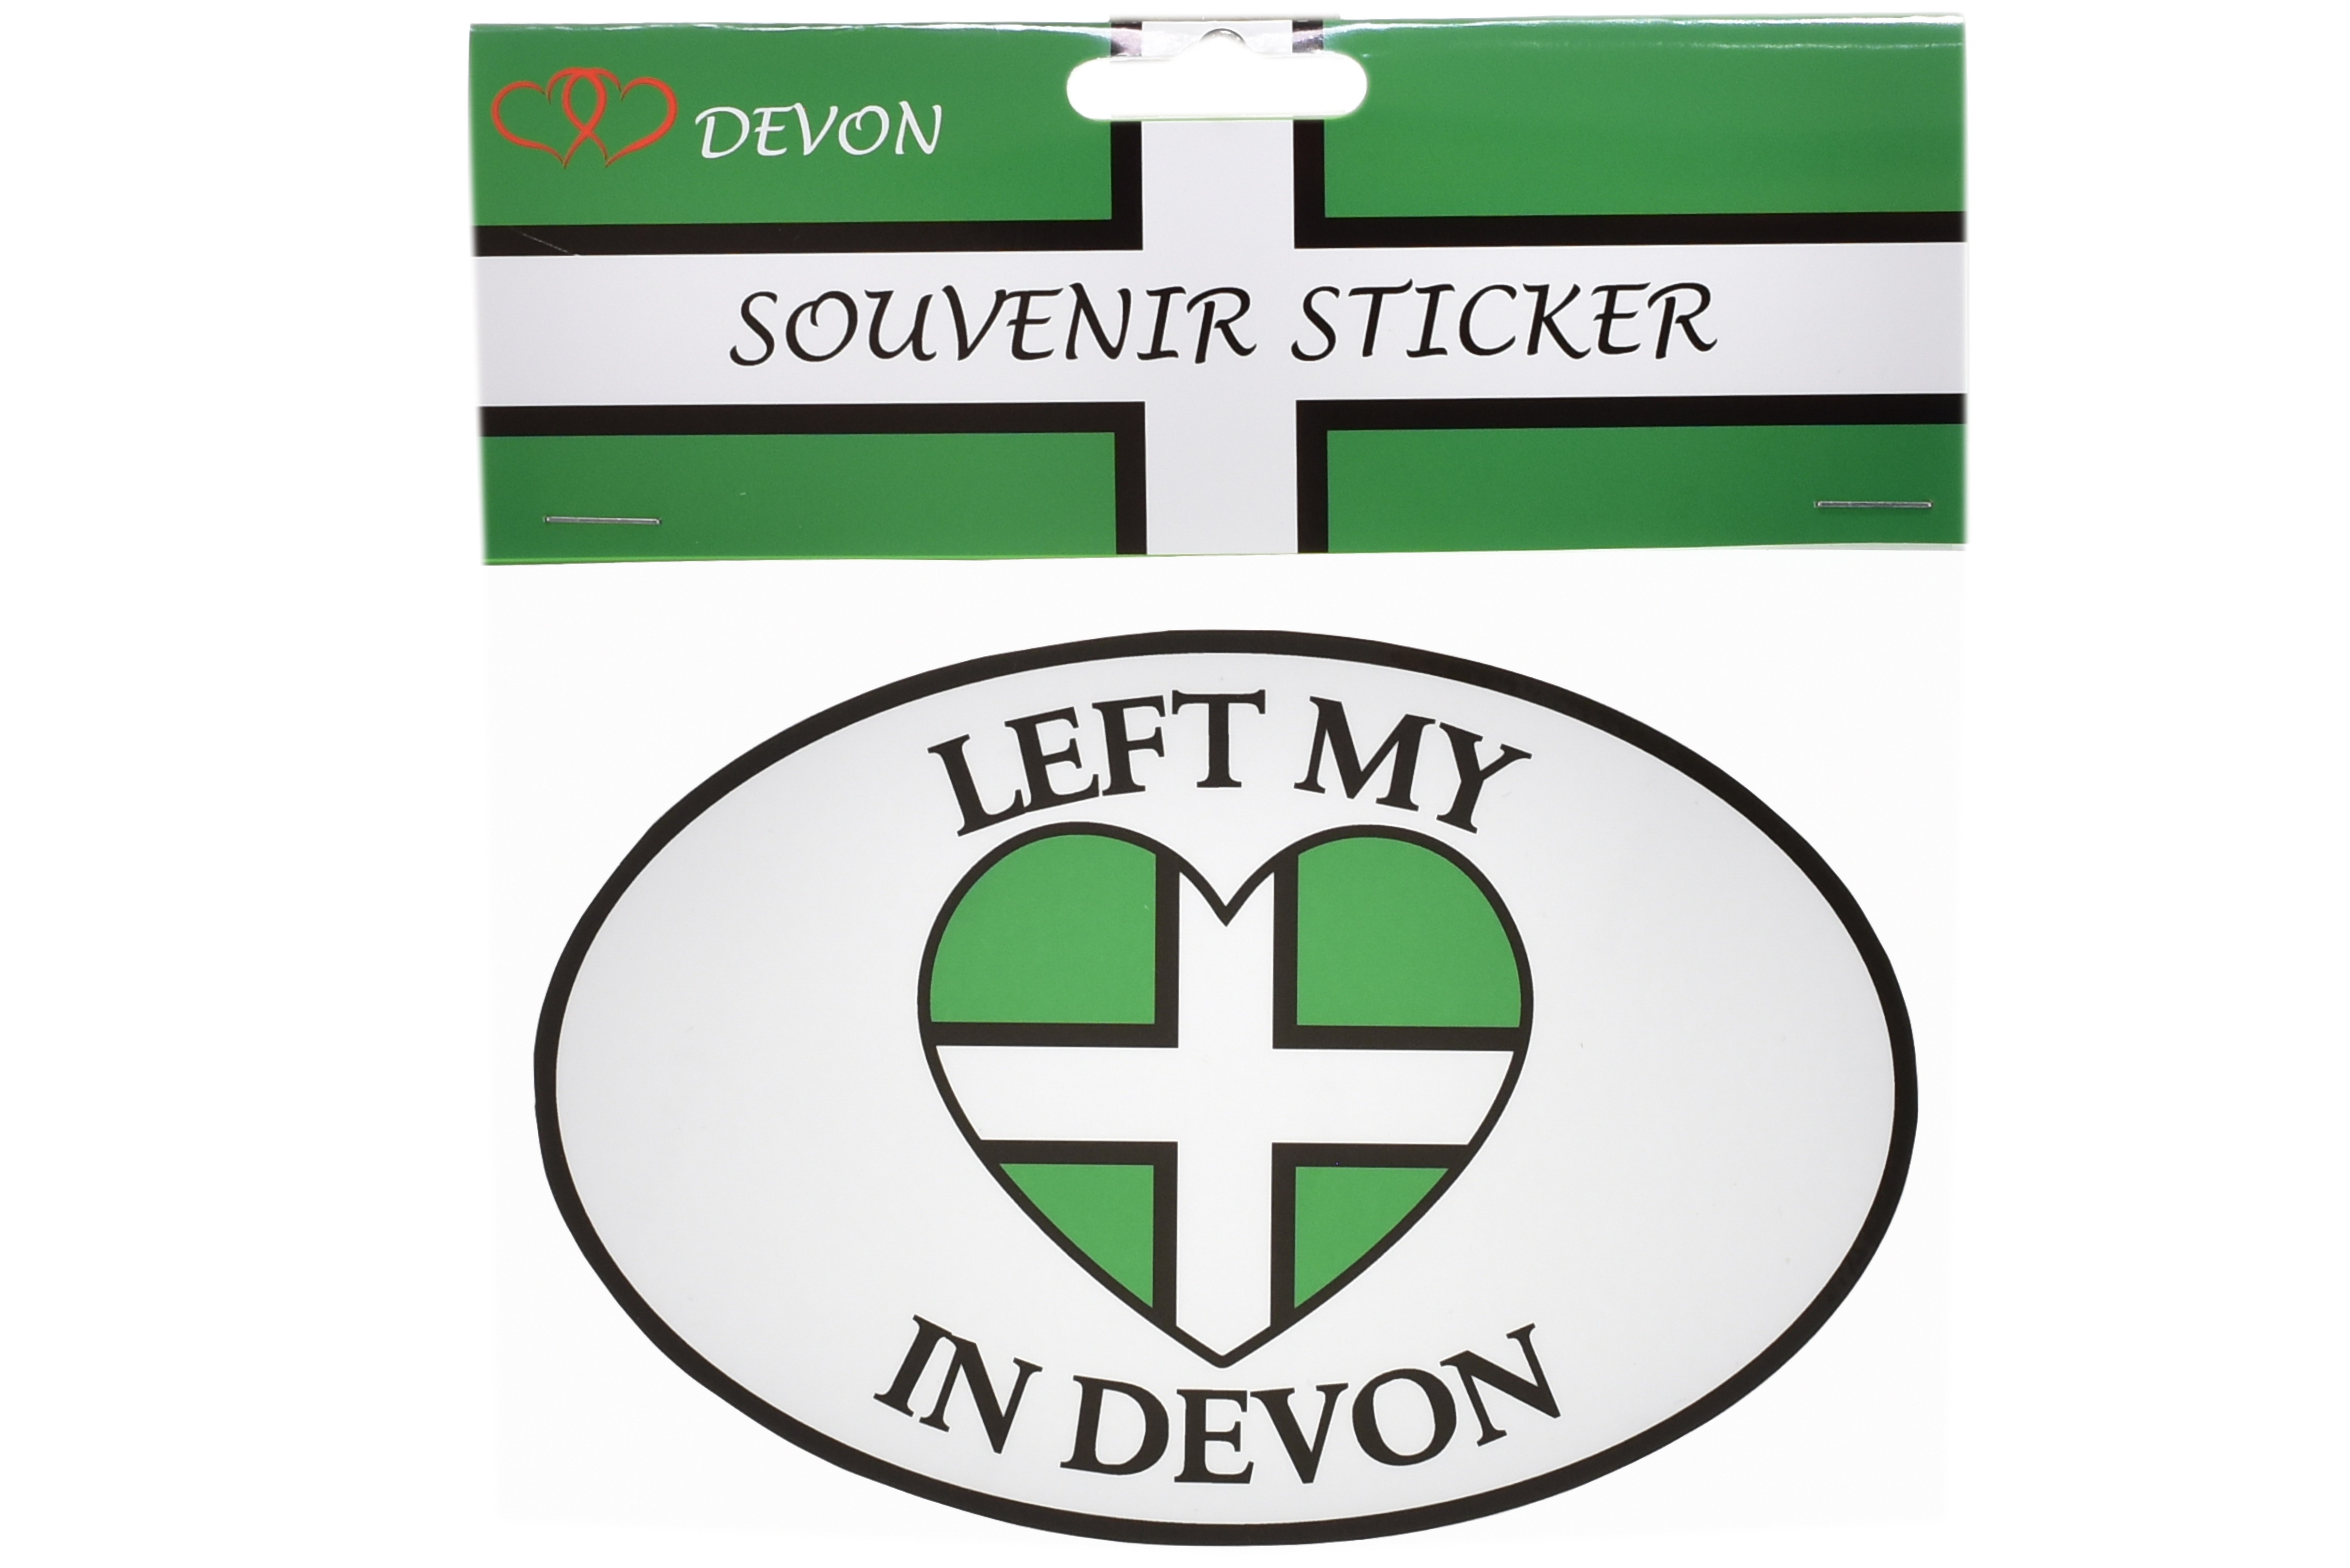 Left My Heart In Devon Bumper Sticker